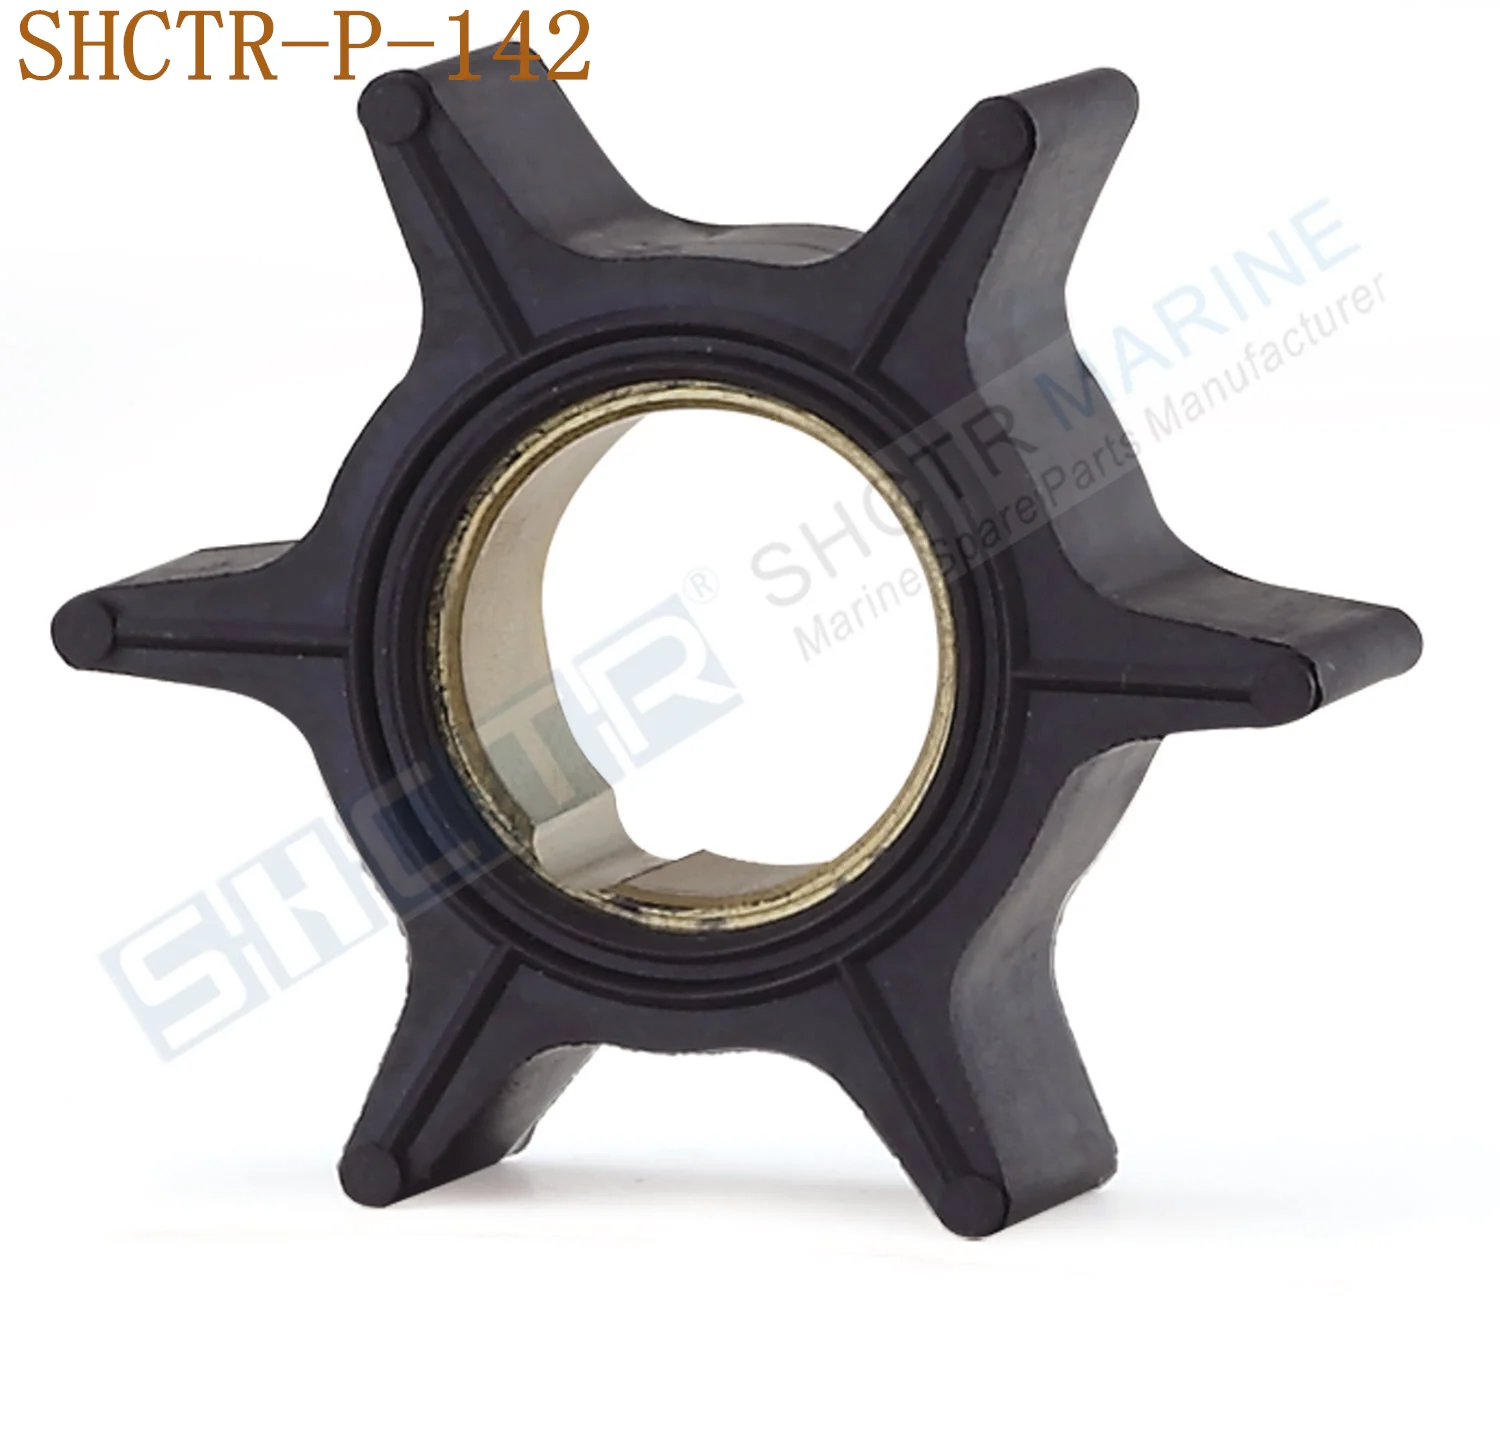 SHCTR подвесное рабочее колесо для Mercruiser 17461-95201 47-89983 T/65959 Sierra 18-3007 CEF 500312 Mallory 9-45300 30-70HP